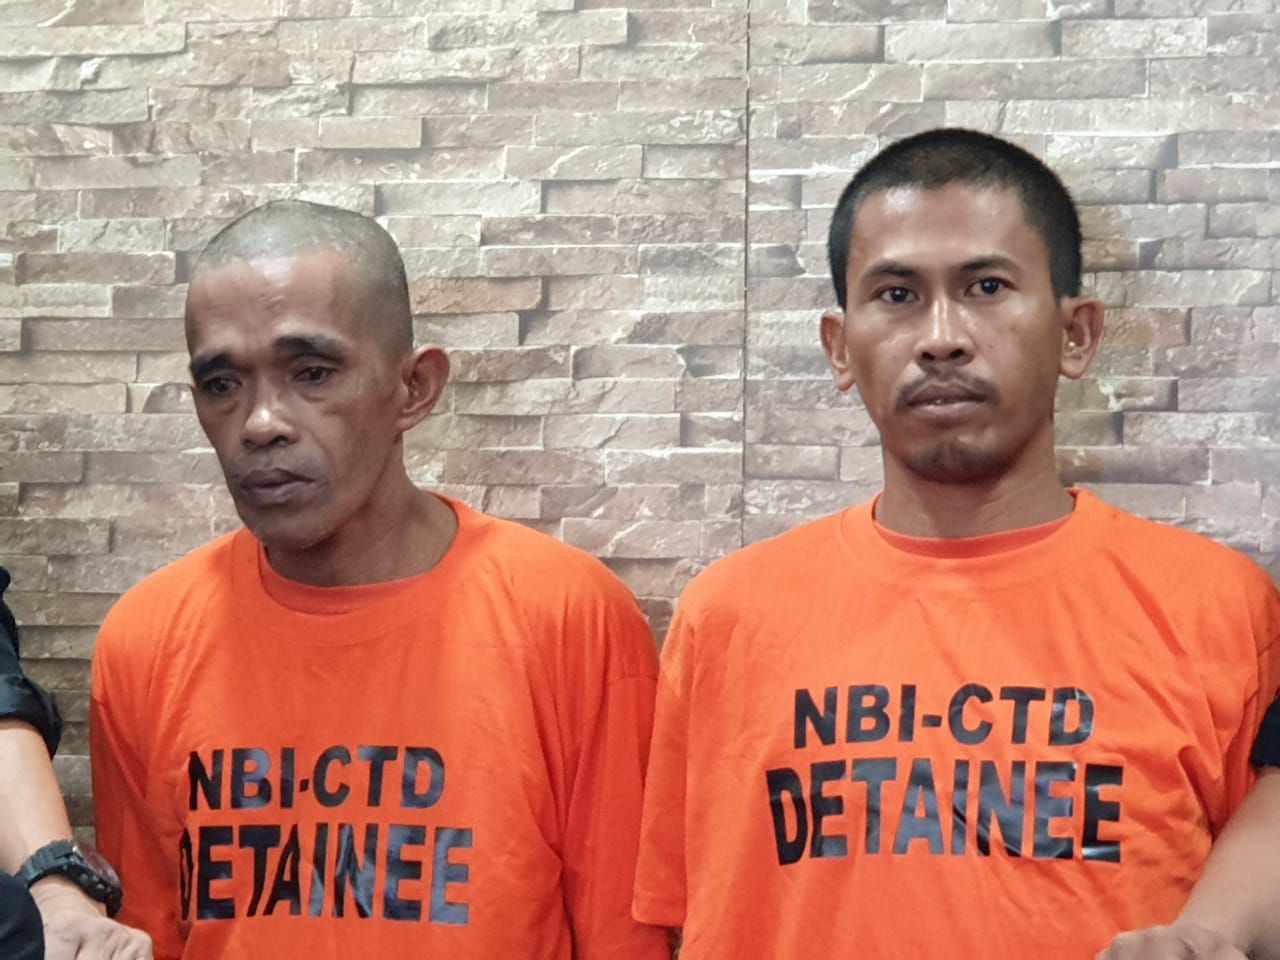 NBI arrest 2 Abu Sayyaf members in Zamboanga City